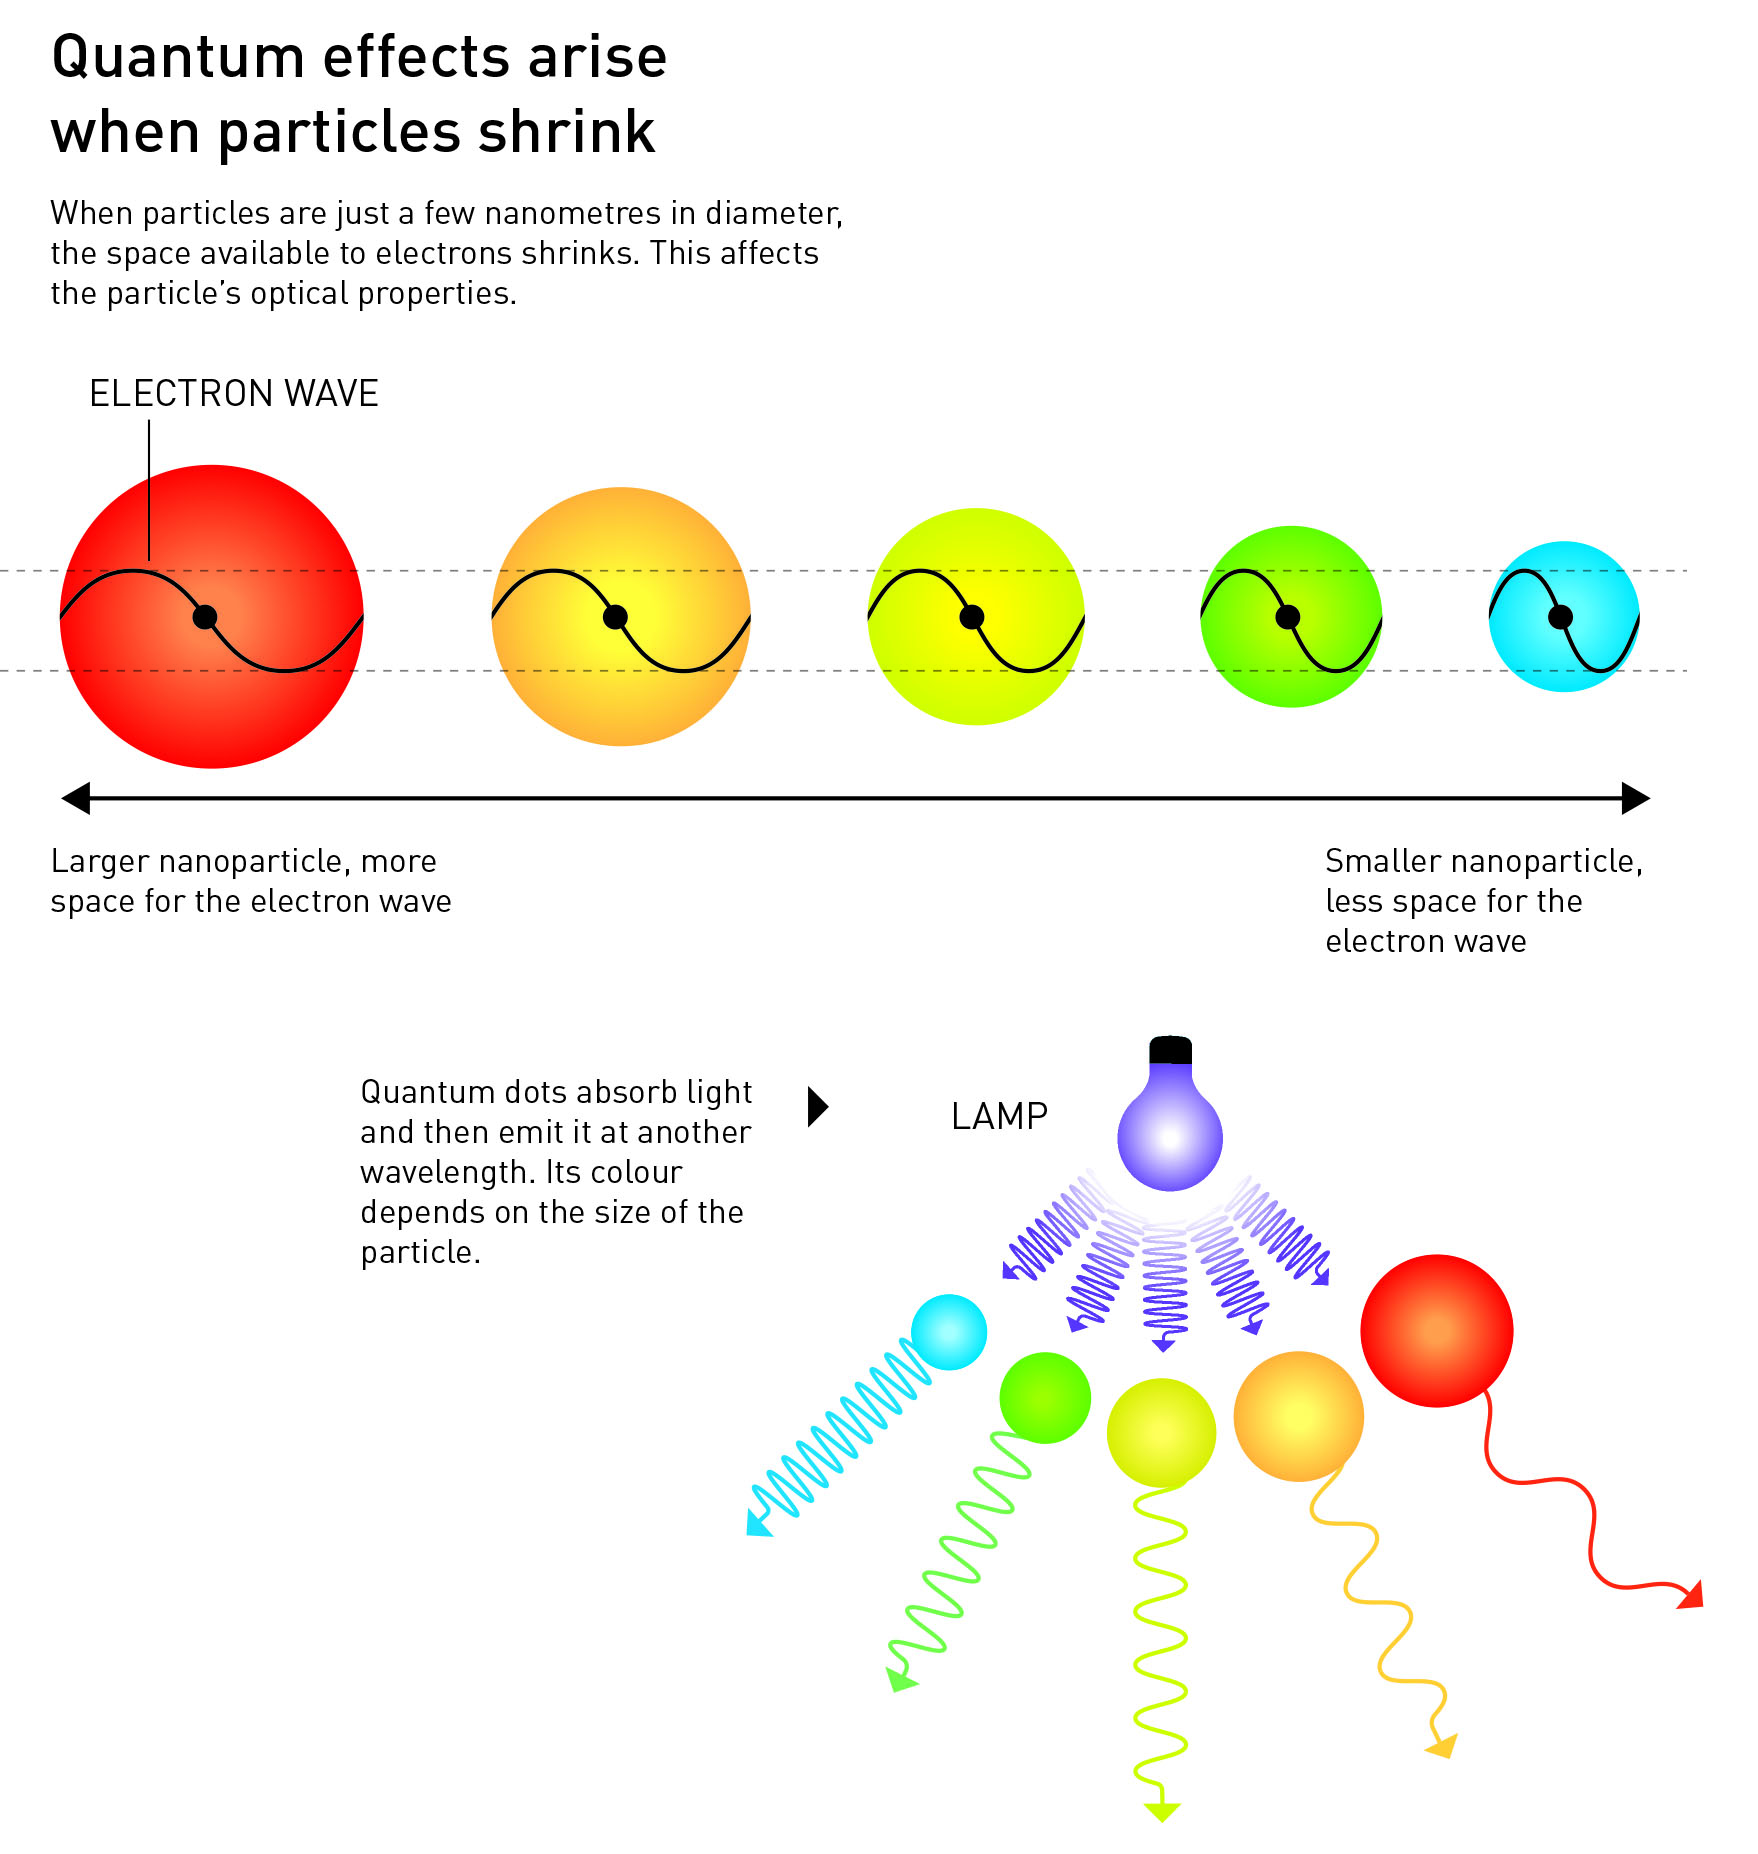 Quantum effects arise when particles shrink